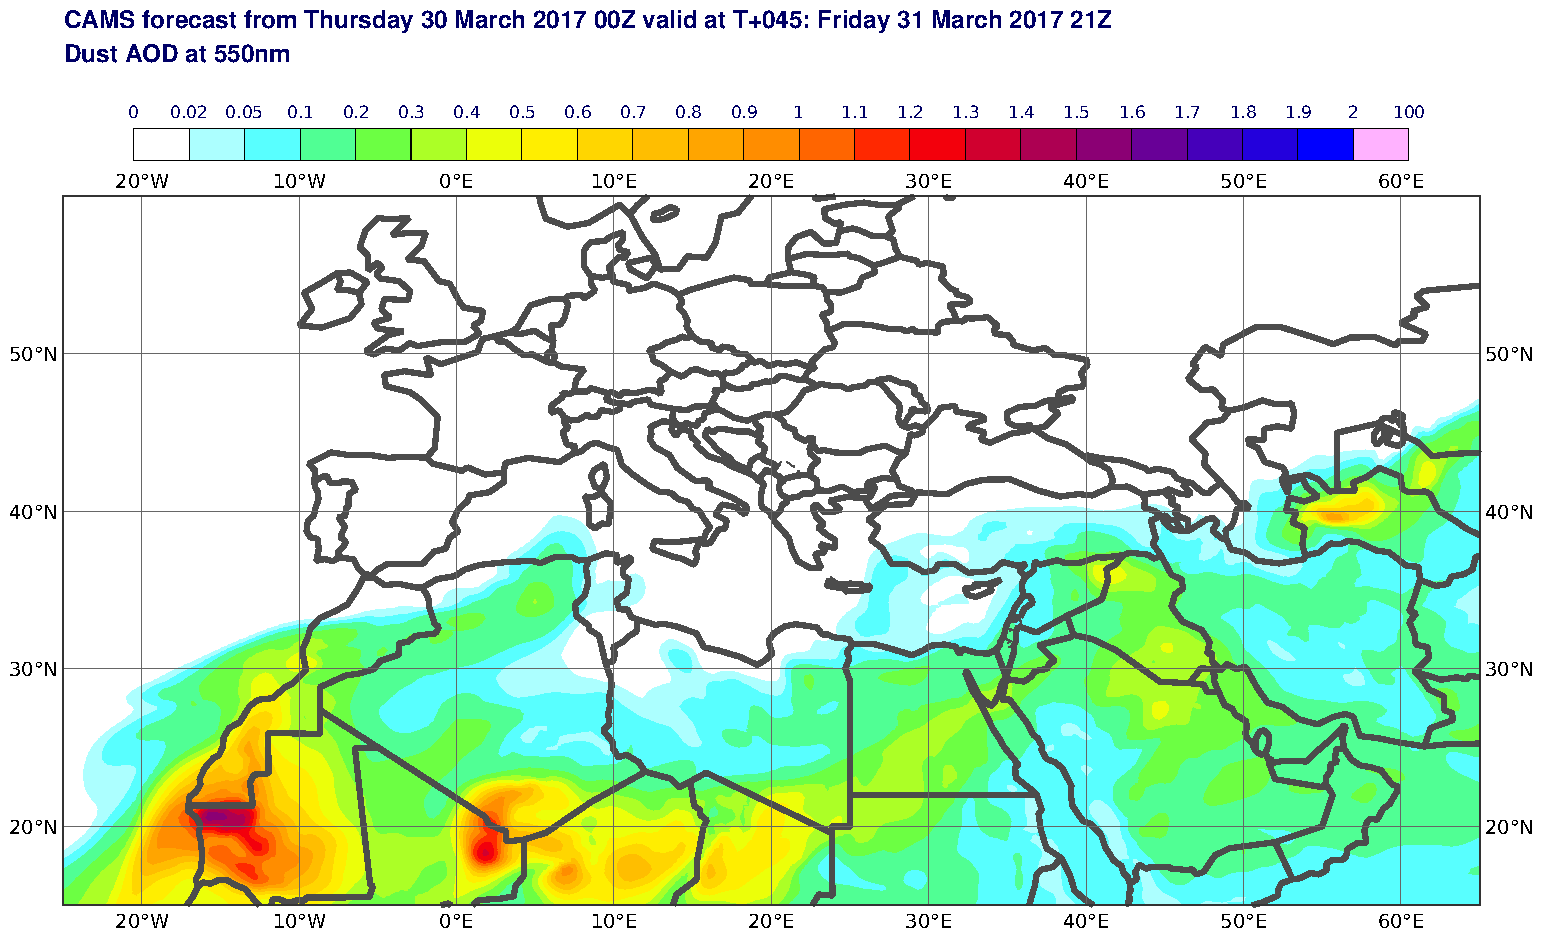 Dust AOD at 550nm valid at T45 - 2017-03-31 21:00